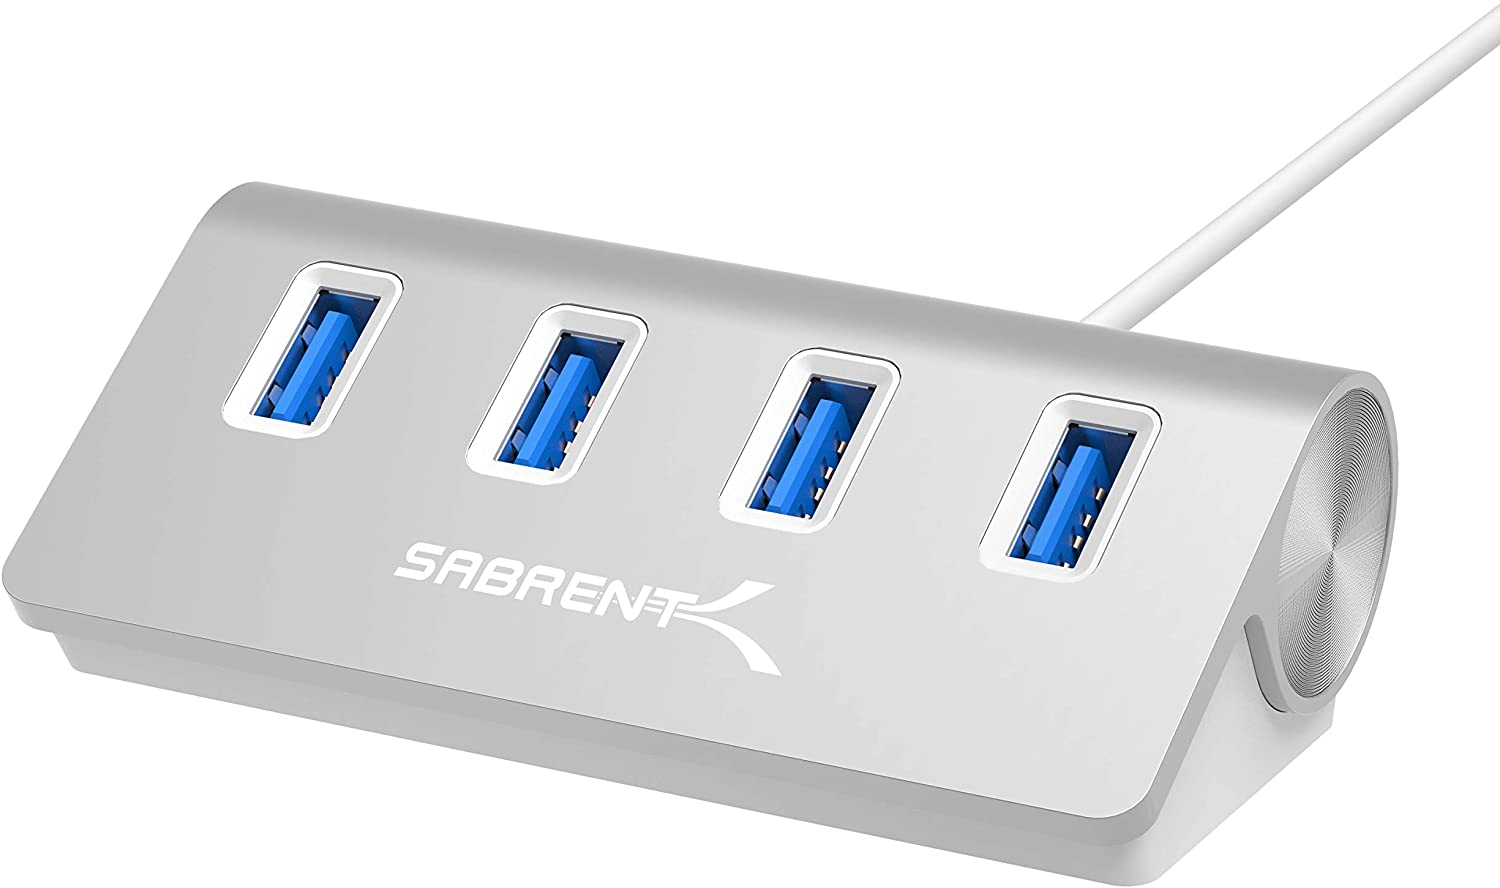 SABRENT 4 Port USB 3.0 Hub Unibody Aluminum Portable Data Hub with 2.5ft USB 3.0 Cable for iMac, MacBook, MacBook Pro, MacBook Air, Mac Mini, or Any PC [Silver] (HB-MAC3)